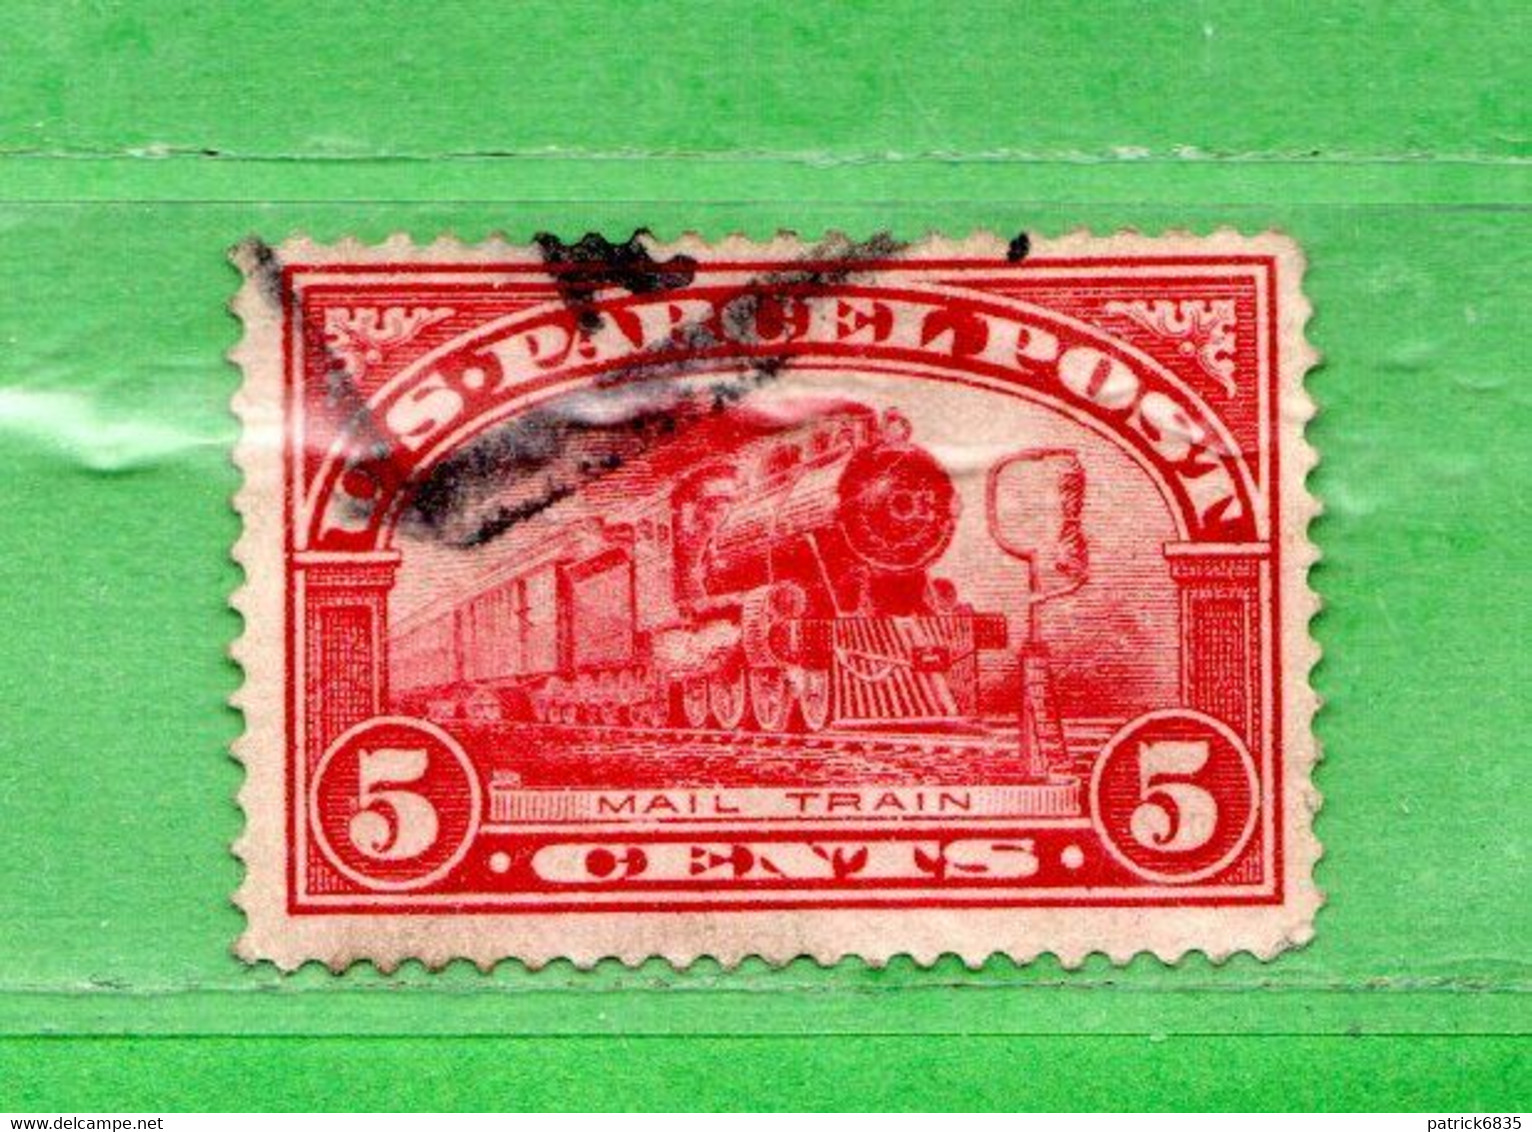 (Us.2) Stati Uniti ° - 1912 PARCEL POST PACCHI POSTALI MAIL TRAIN 5c. Yvert 5.  USATO - Reisgoedzegels